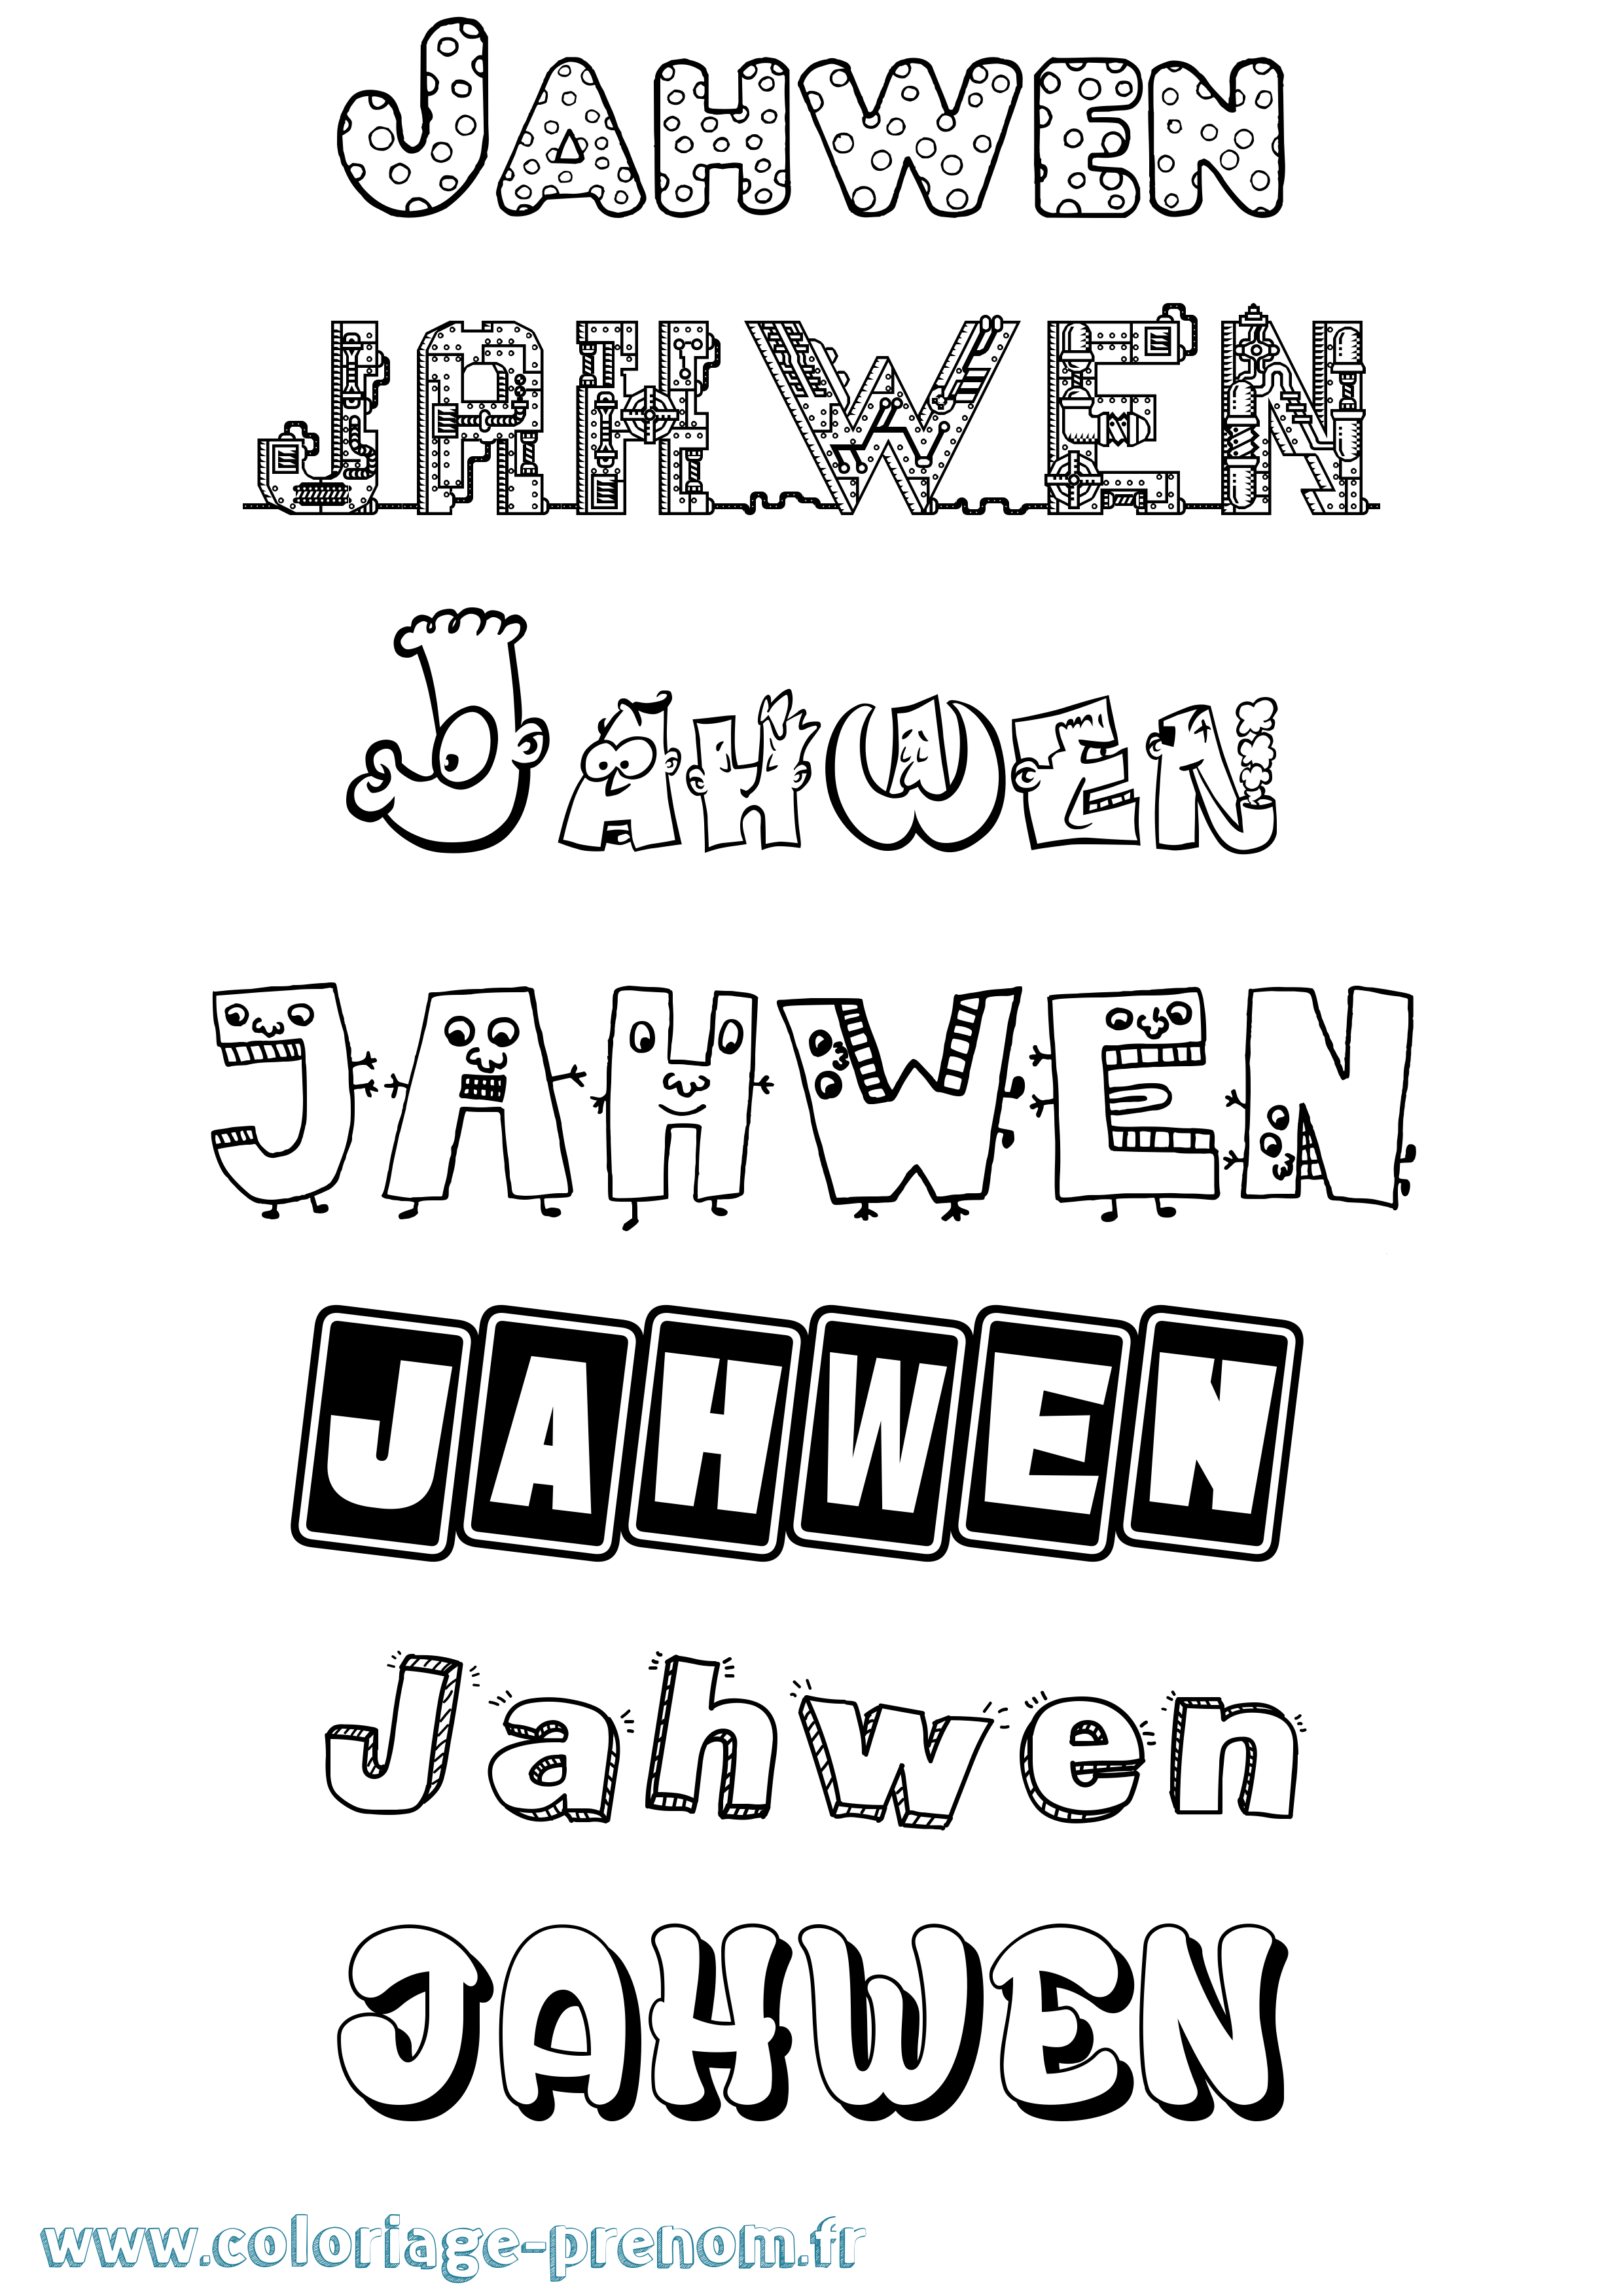 Coloriage prénom Jahwen Fun